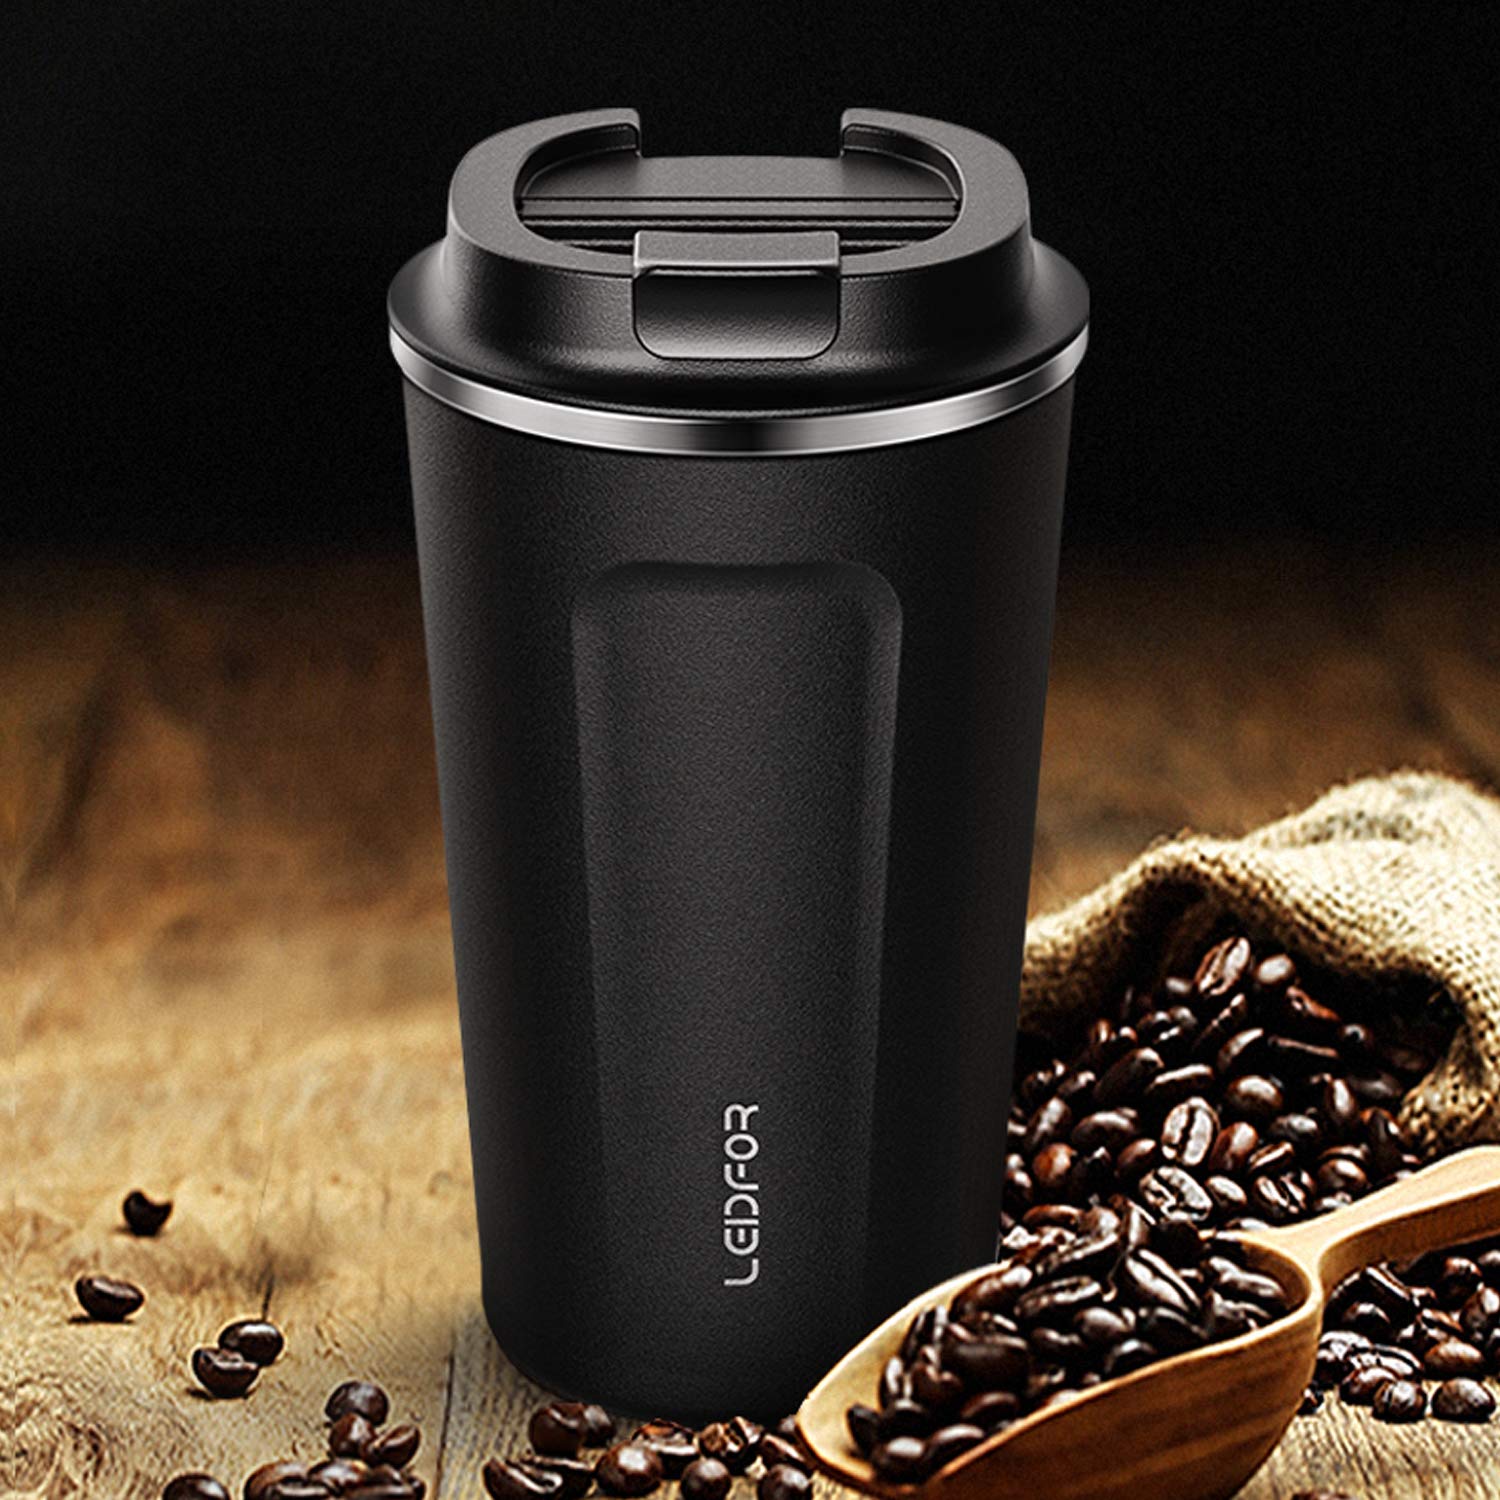 microwavable coffee travel mug with lid